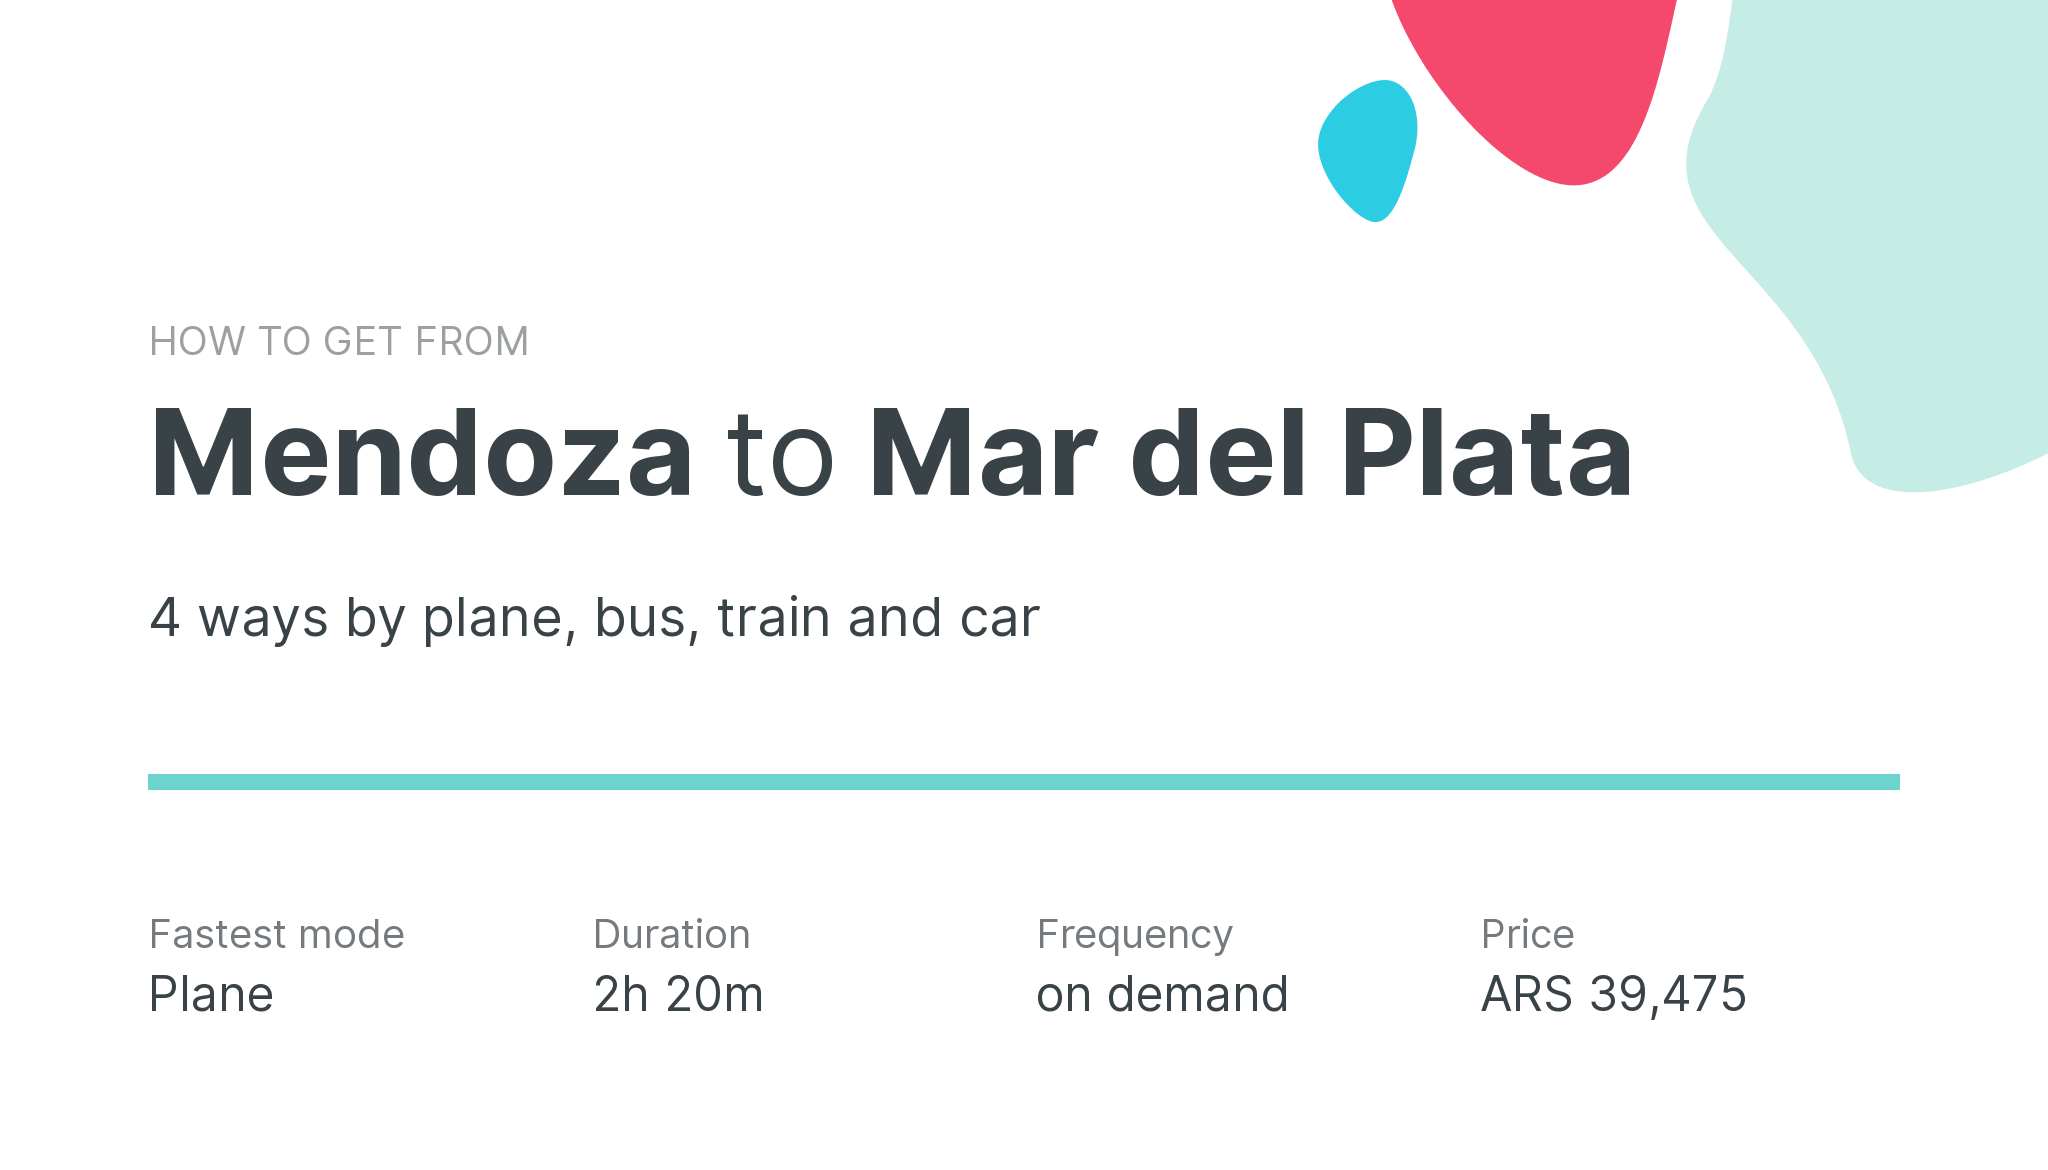 How do I get from Mendoza to Mar del Plata